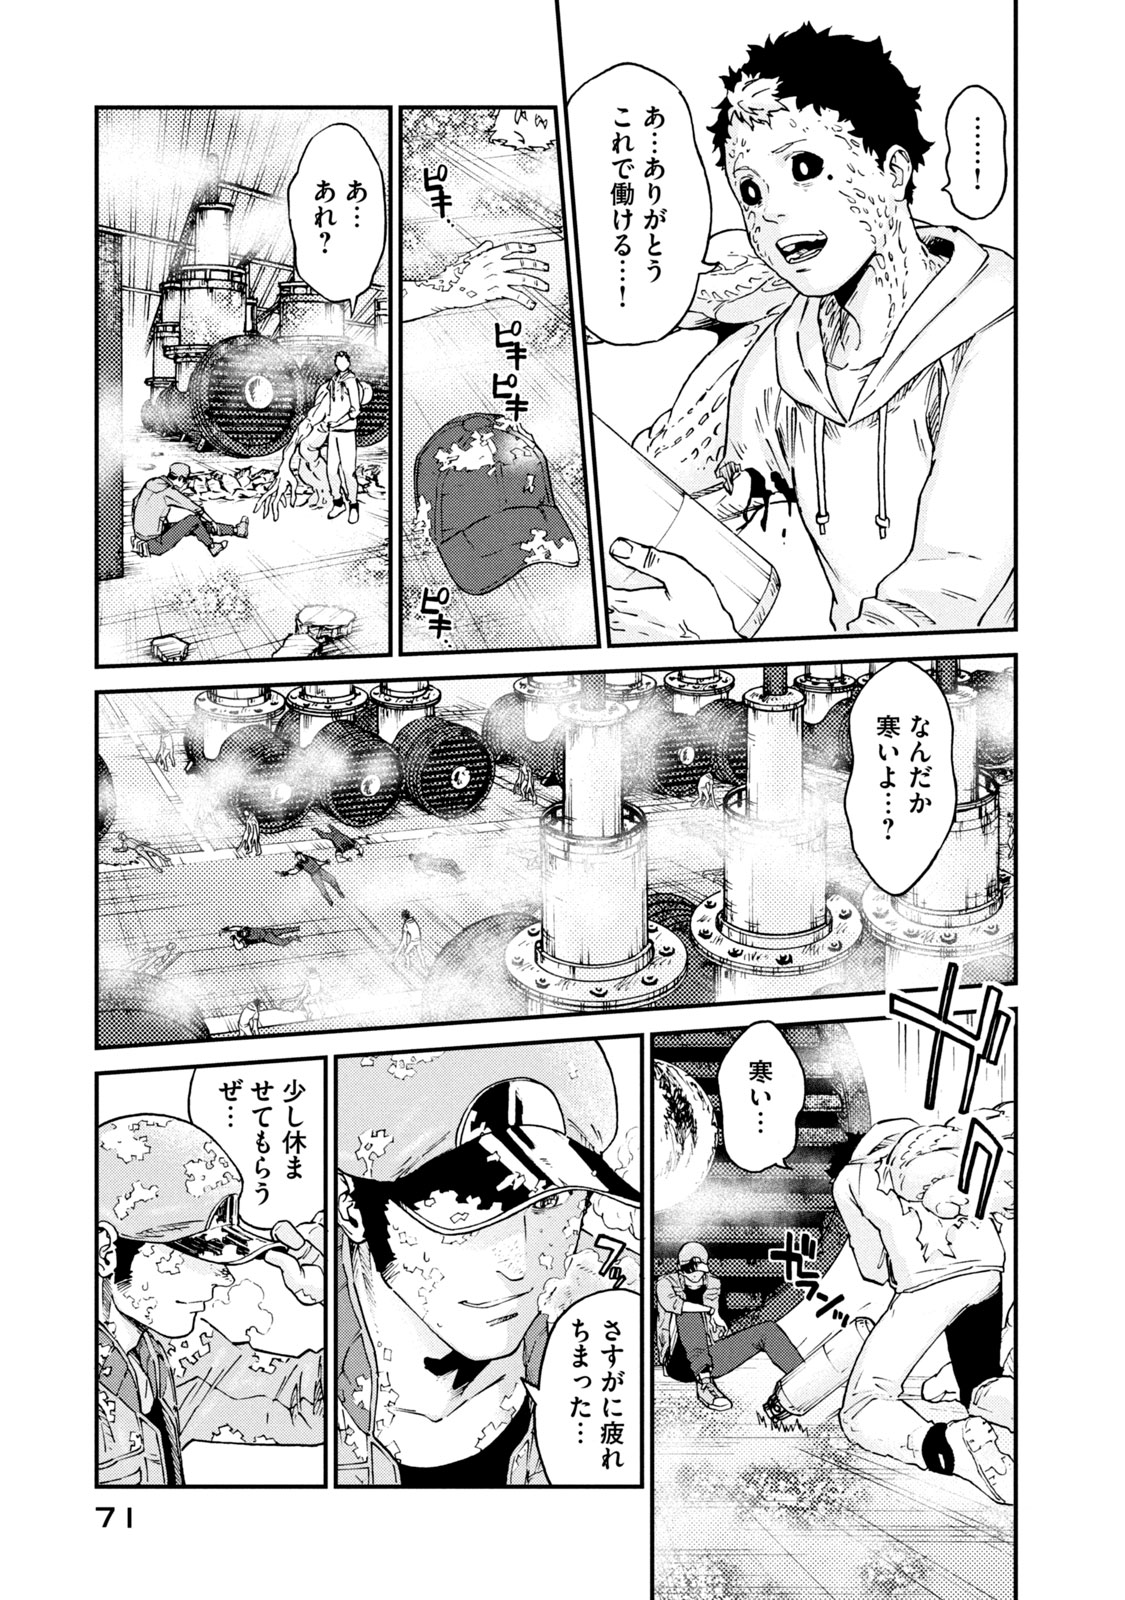 Hataraku Saibou BLACK - Chapter 39 - Page 9